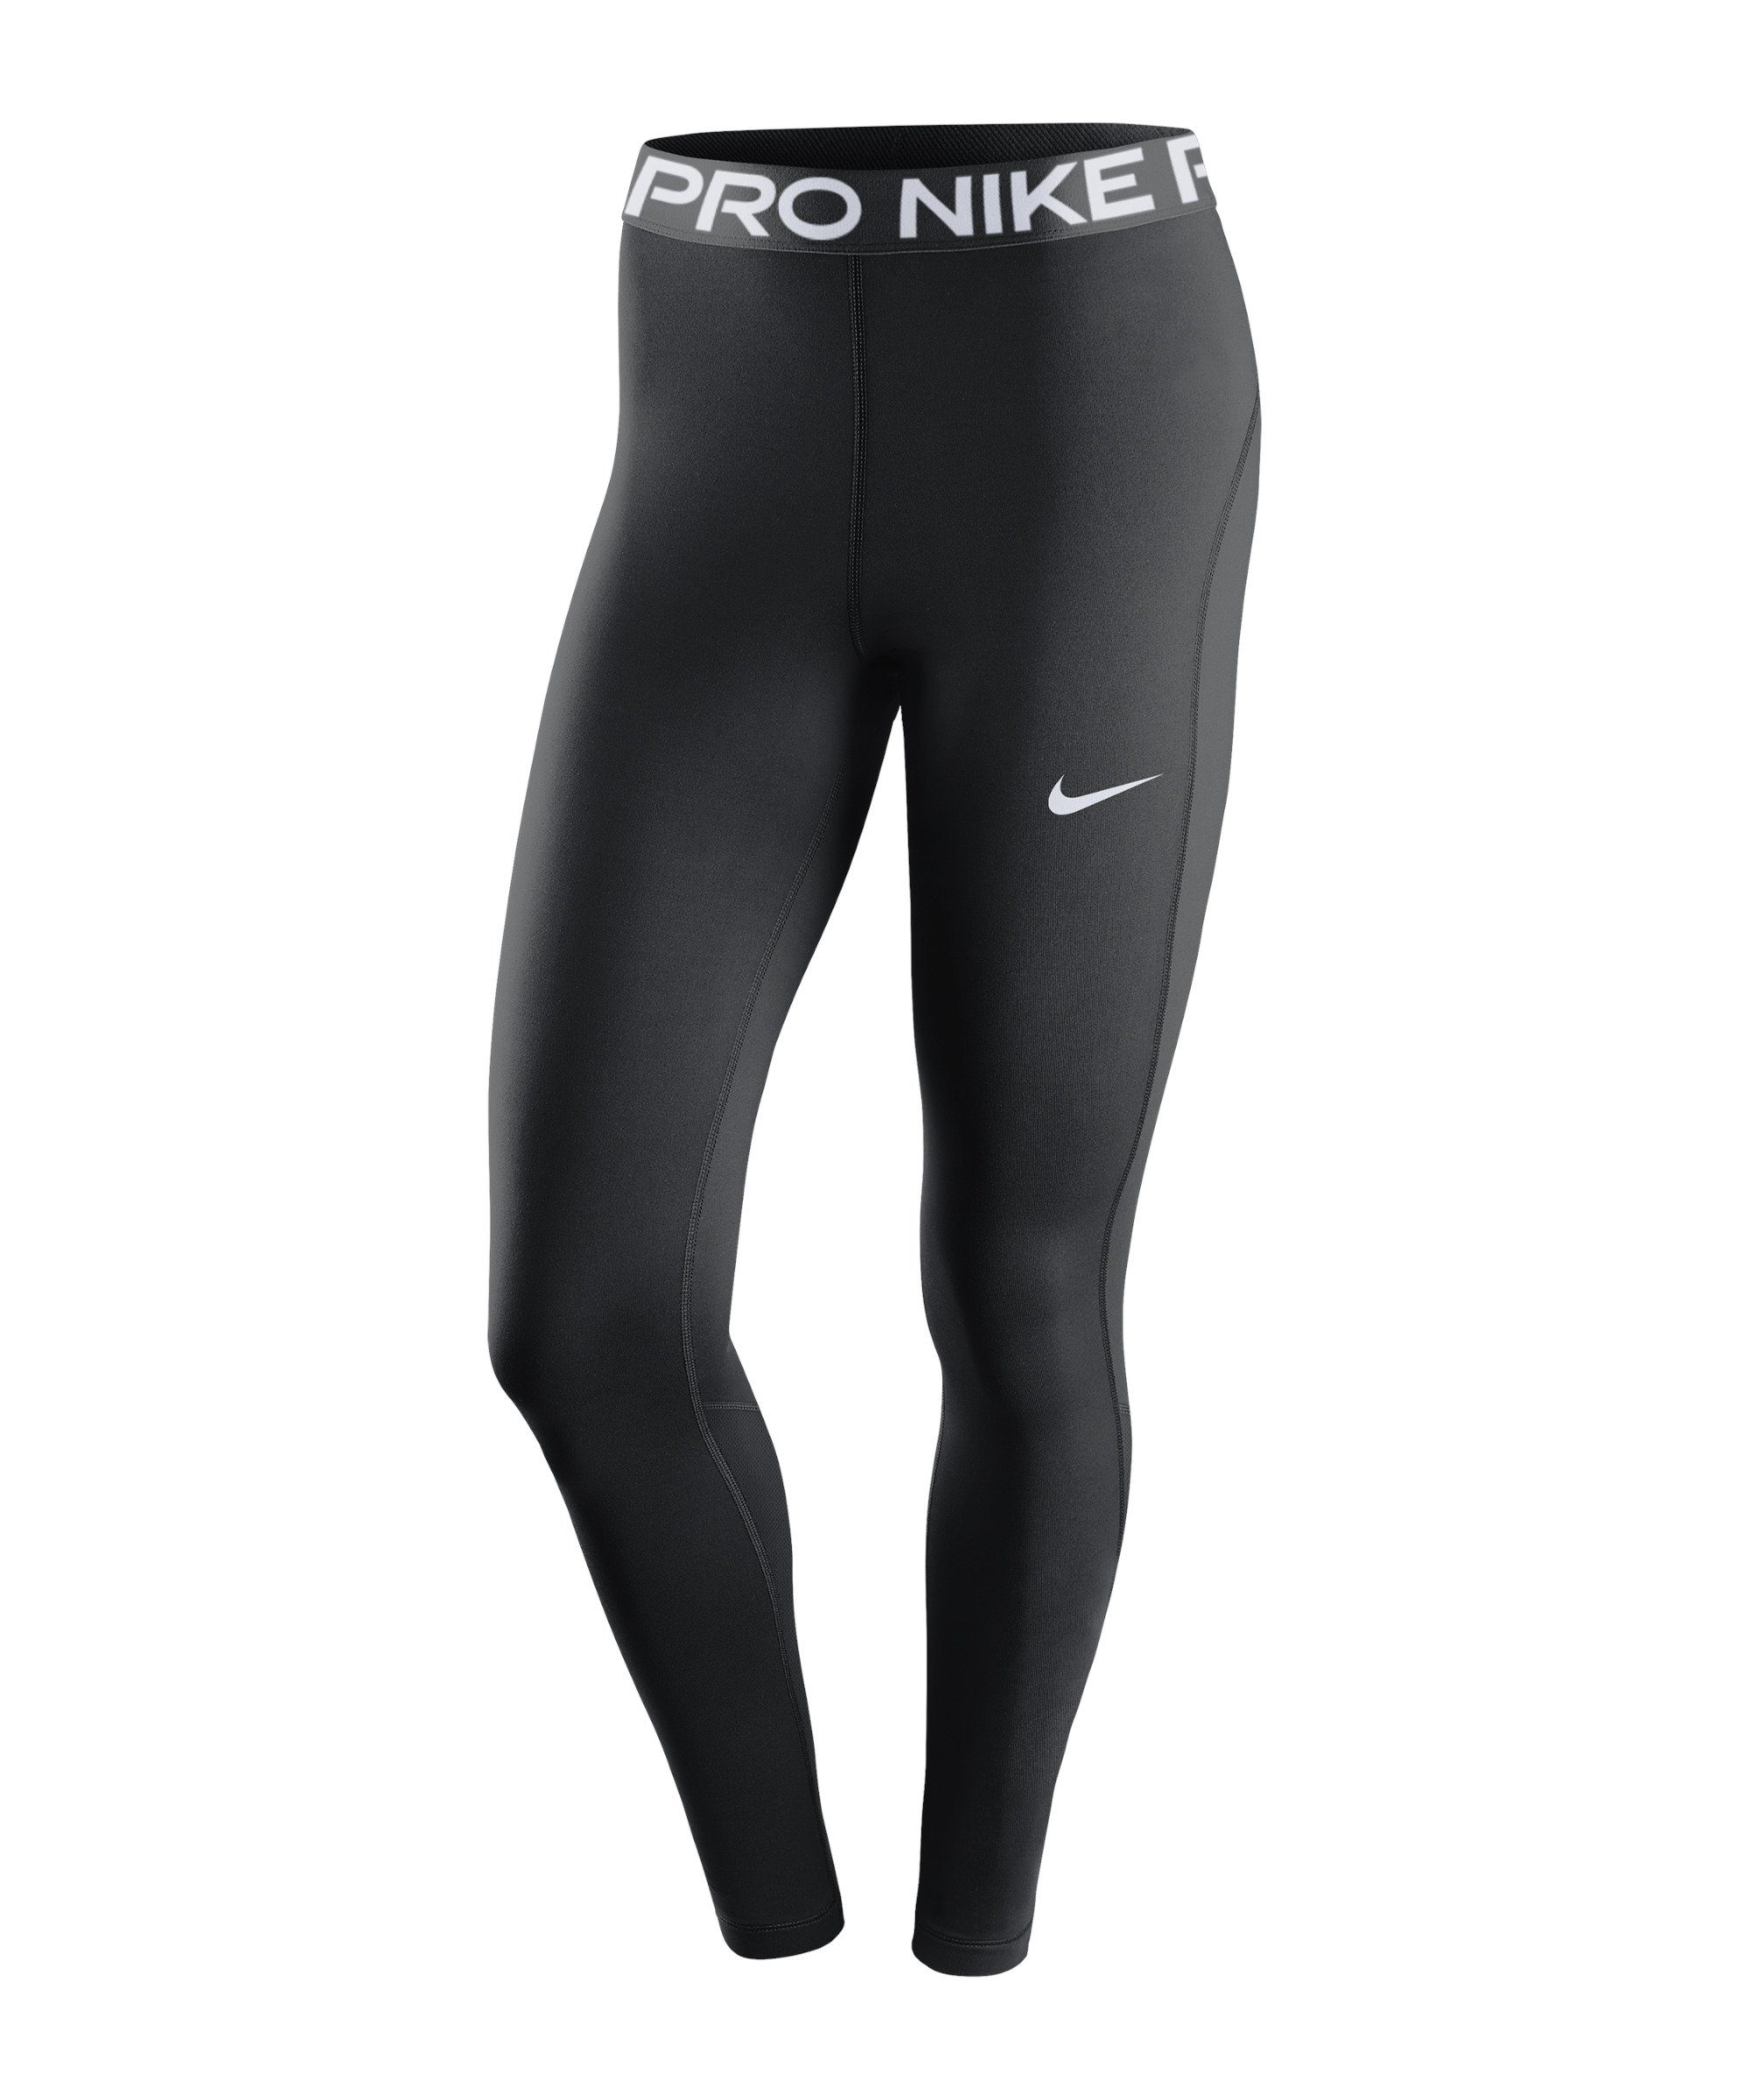 Nike Laufhose 365 Leggings Damen schwarzweiss